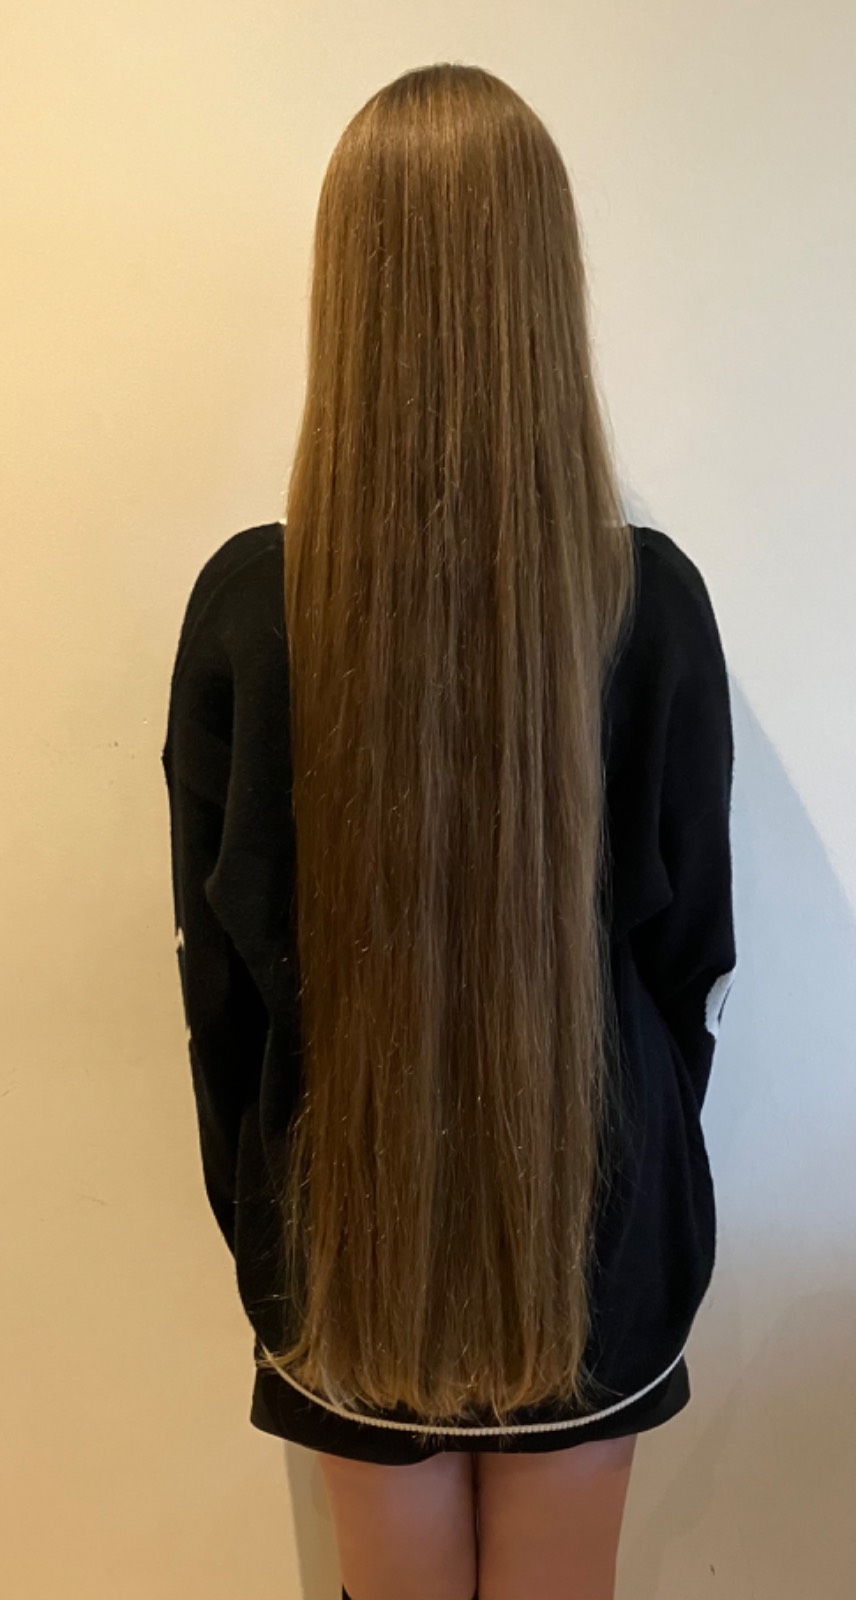 Kira’s hair donation - aged 10